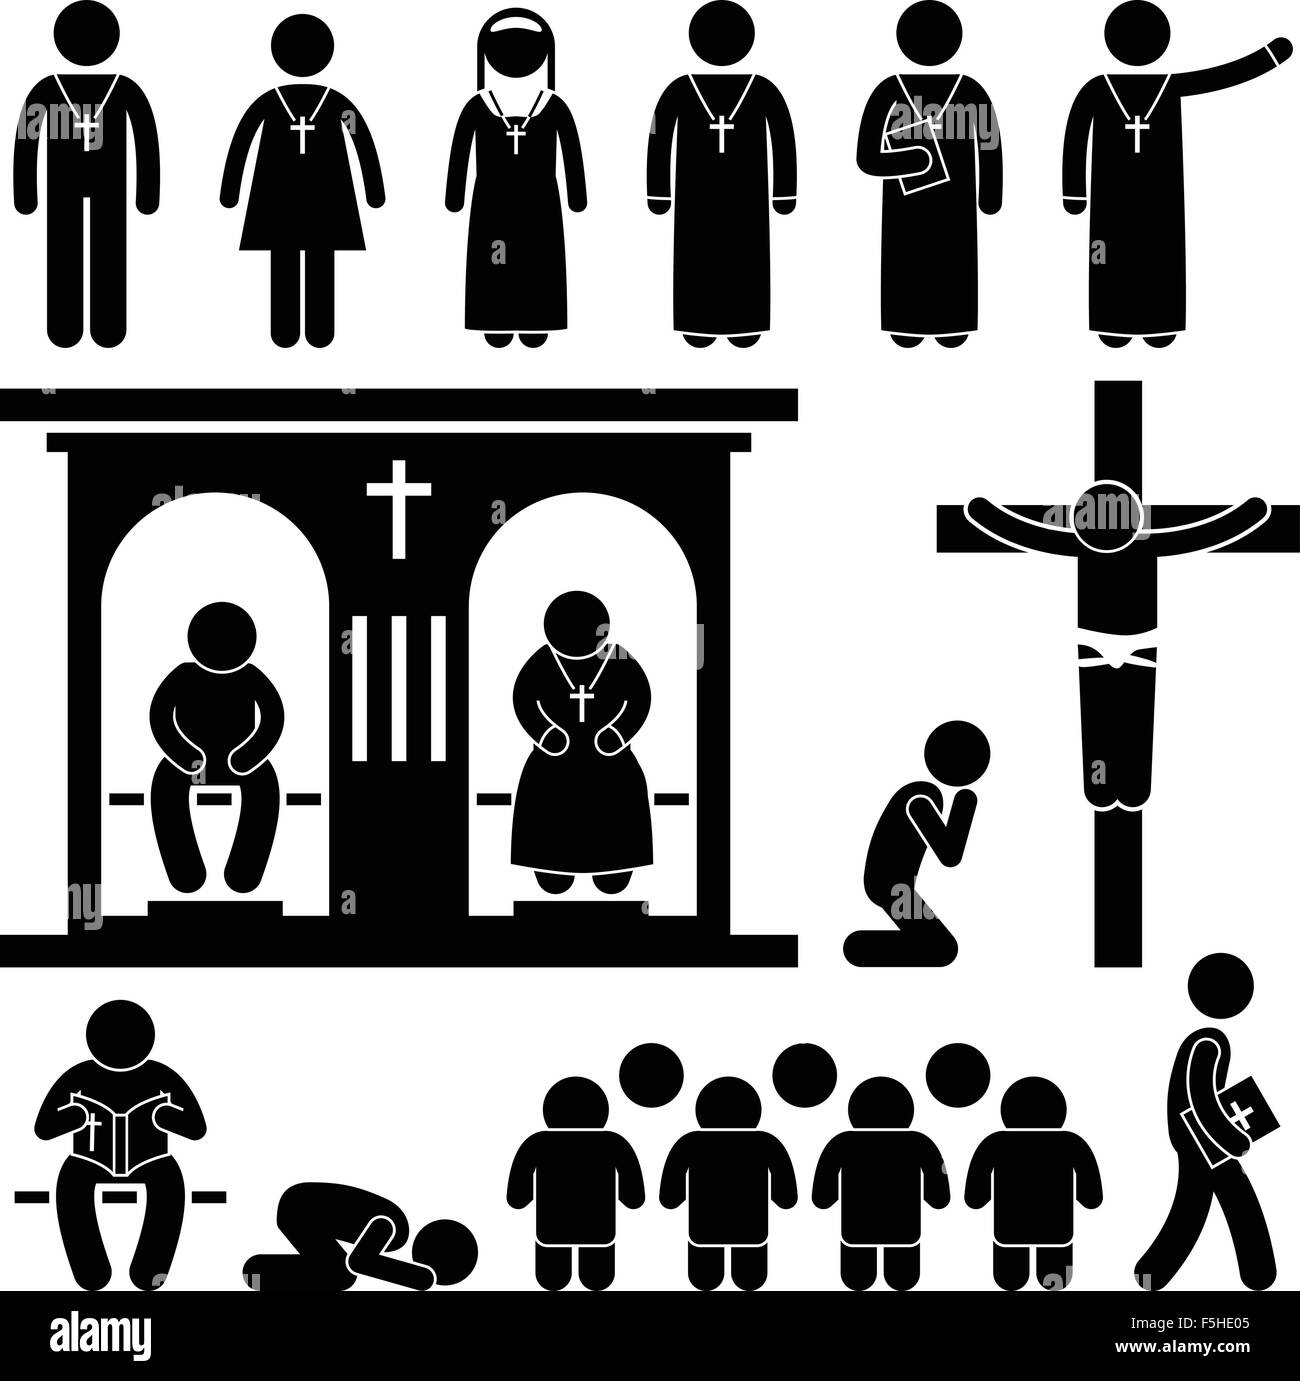 Christliche Religion Kultur Tradition Kirche Gebet Priester Pastor Nonne Strichmännchen Piktogramm Symbol Stock Vektor